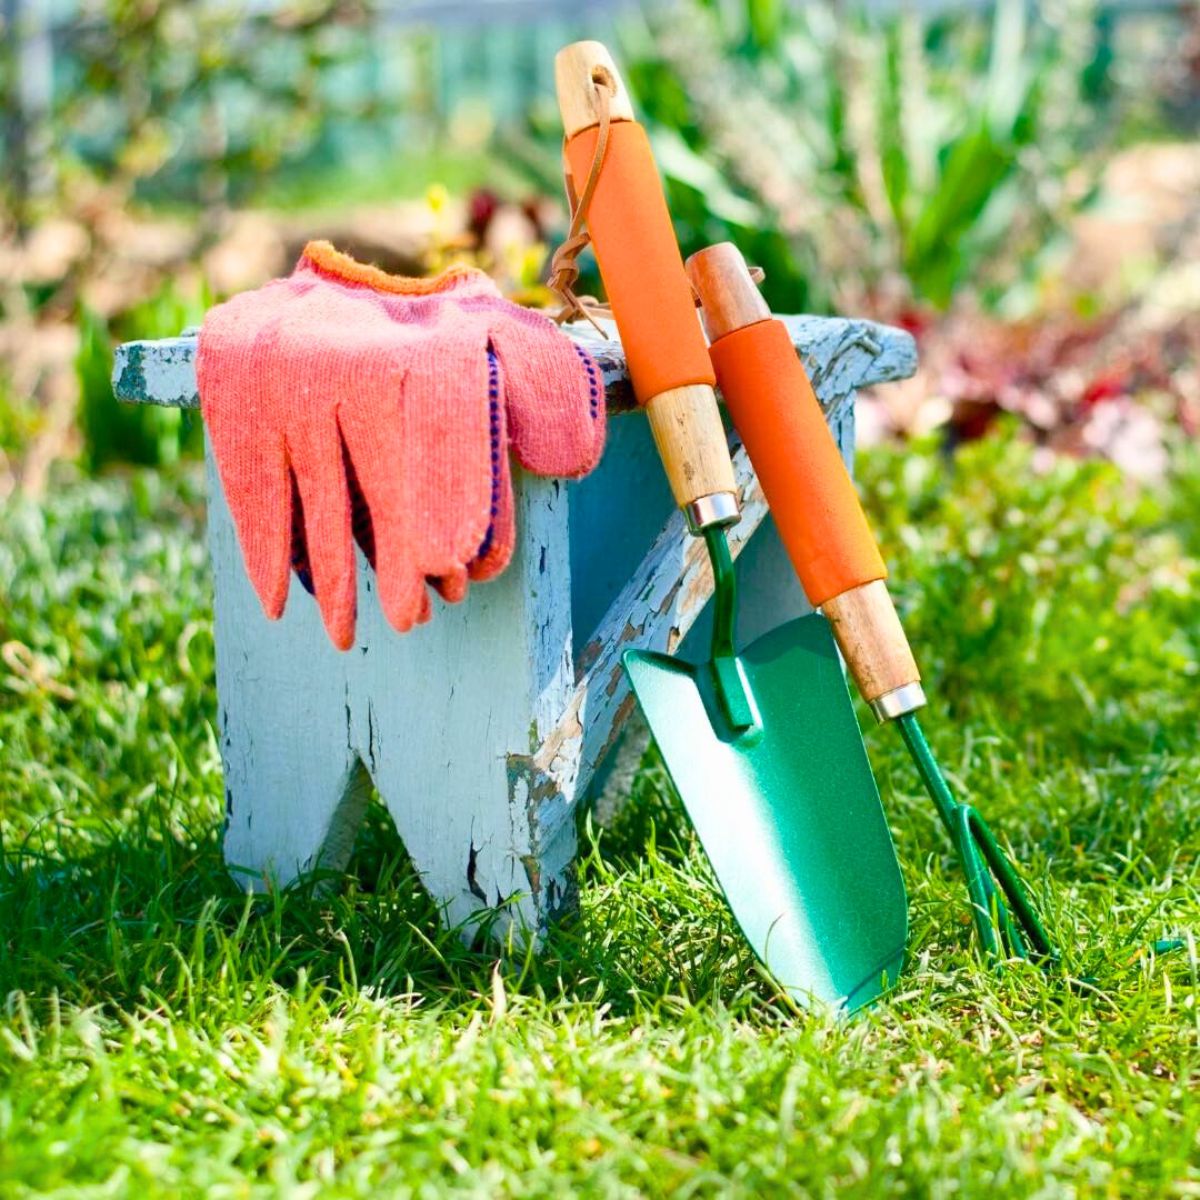 Tools for gardening weeding